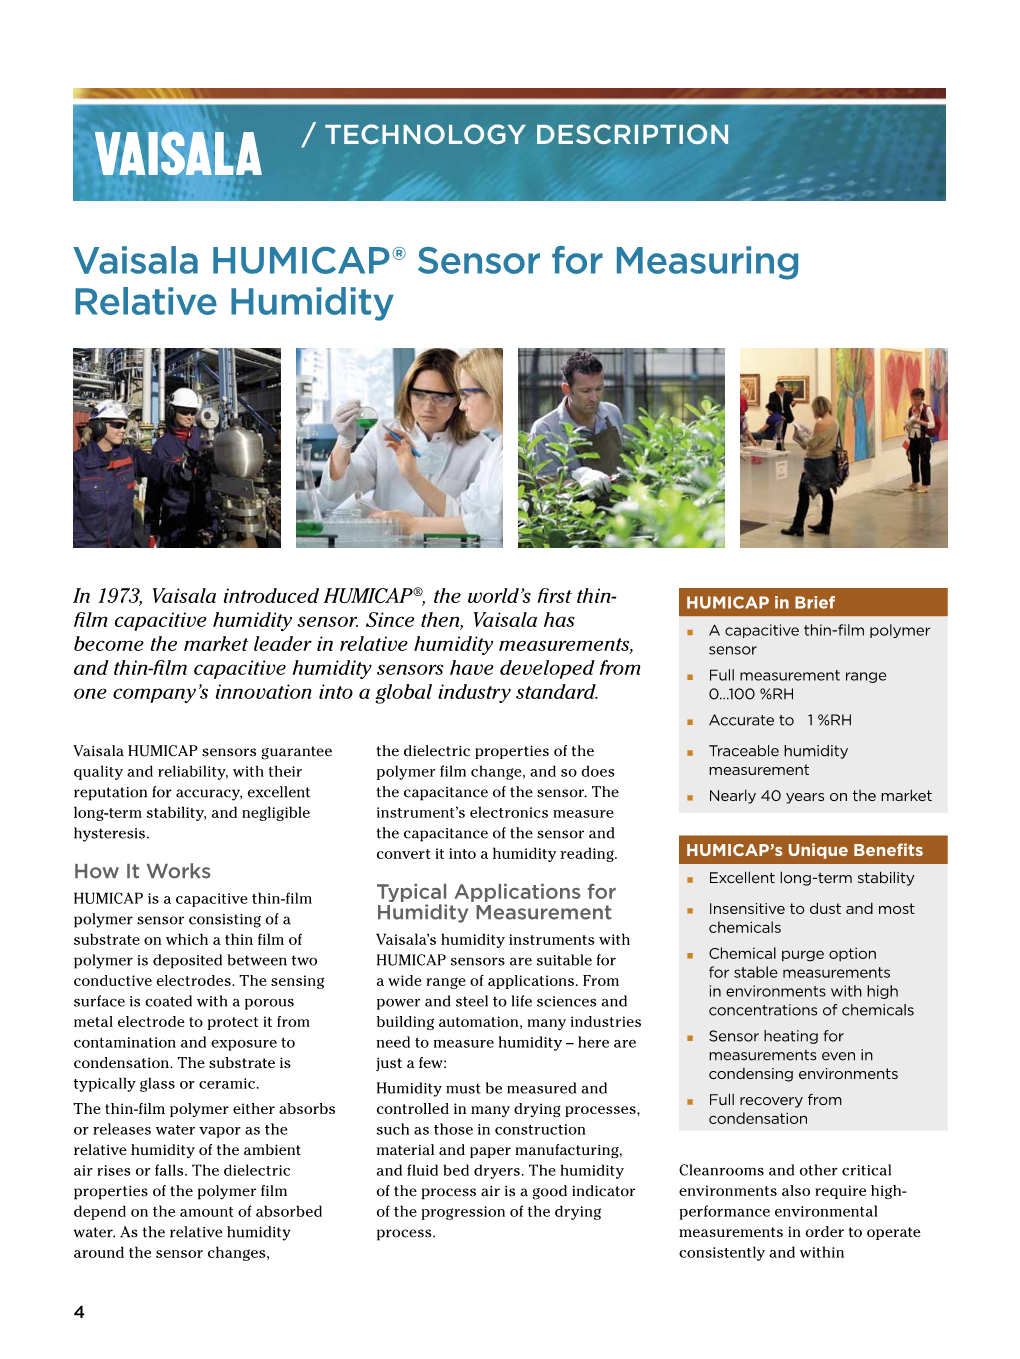 Humidity Vaisala Humicap® Sensor for Measuring Relative Humidity